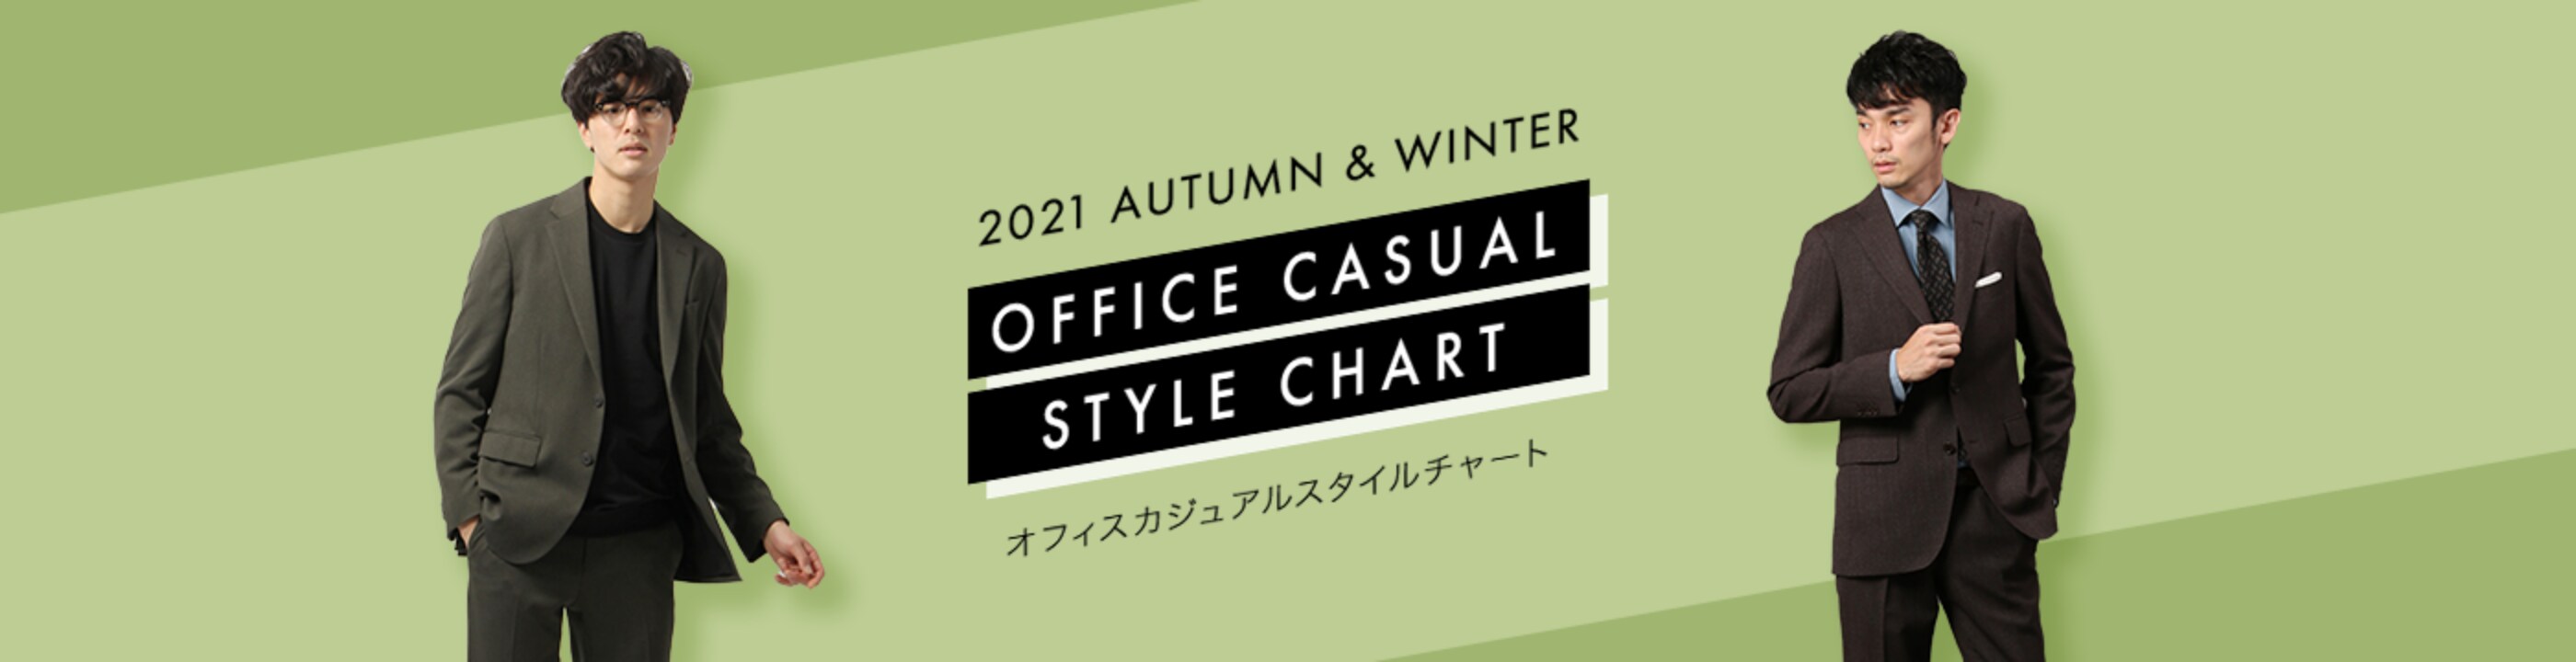 2021 AUTUMN & WINTER OFFICE CASUAL STYLE CHART オフィスカジュアルスタイルチャート